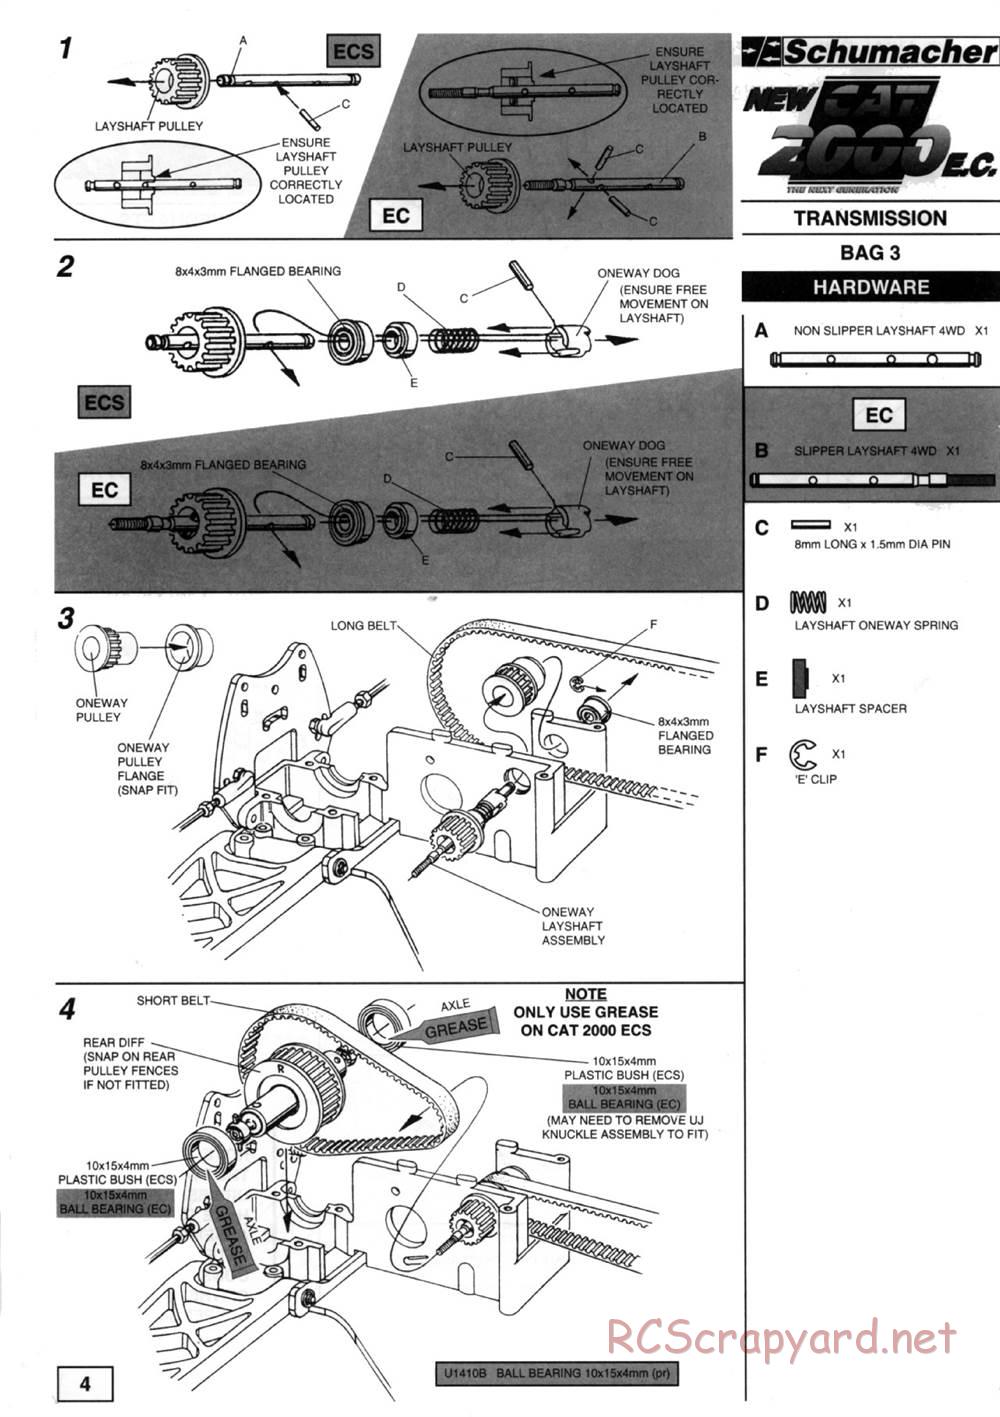 Schumacher - Cat 2000 EC - Manual - Page 6